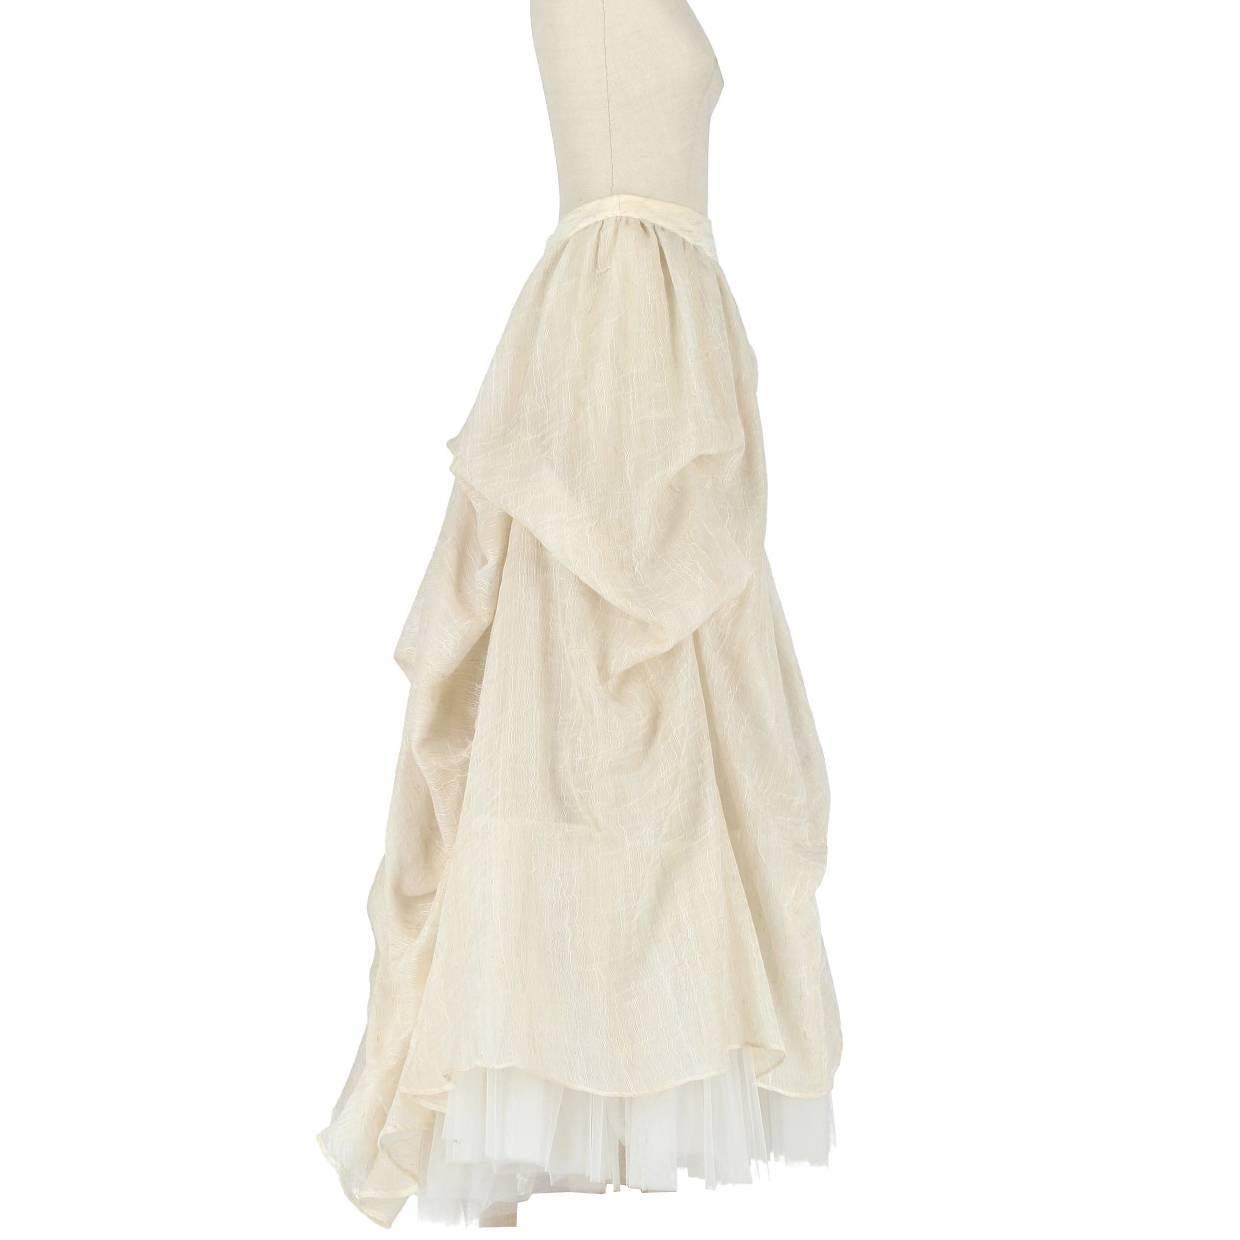 Aimée Ivory White Vintage Two-piece Wedding Dress, 2000s 2